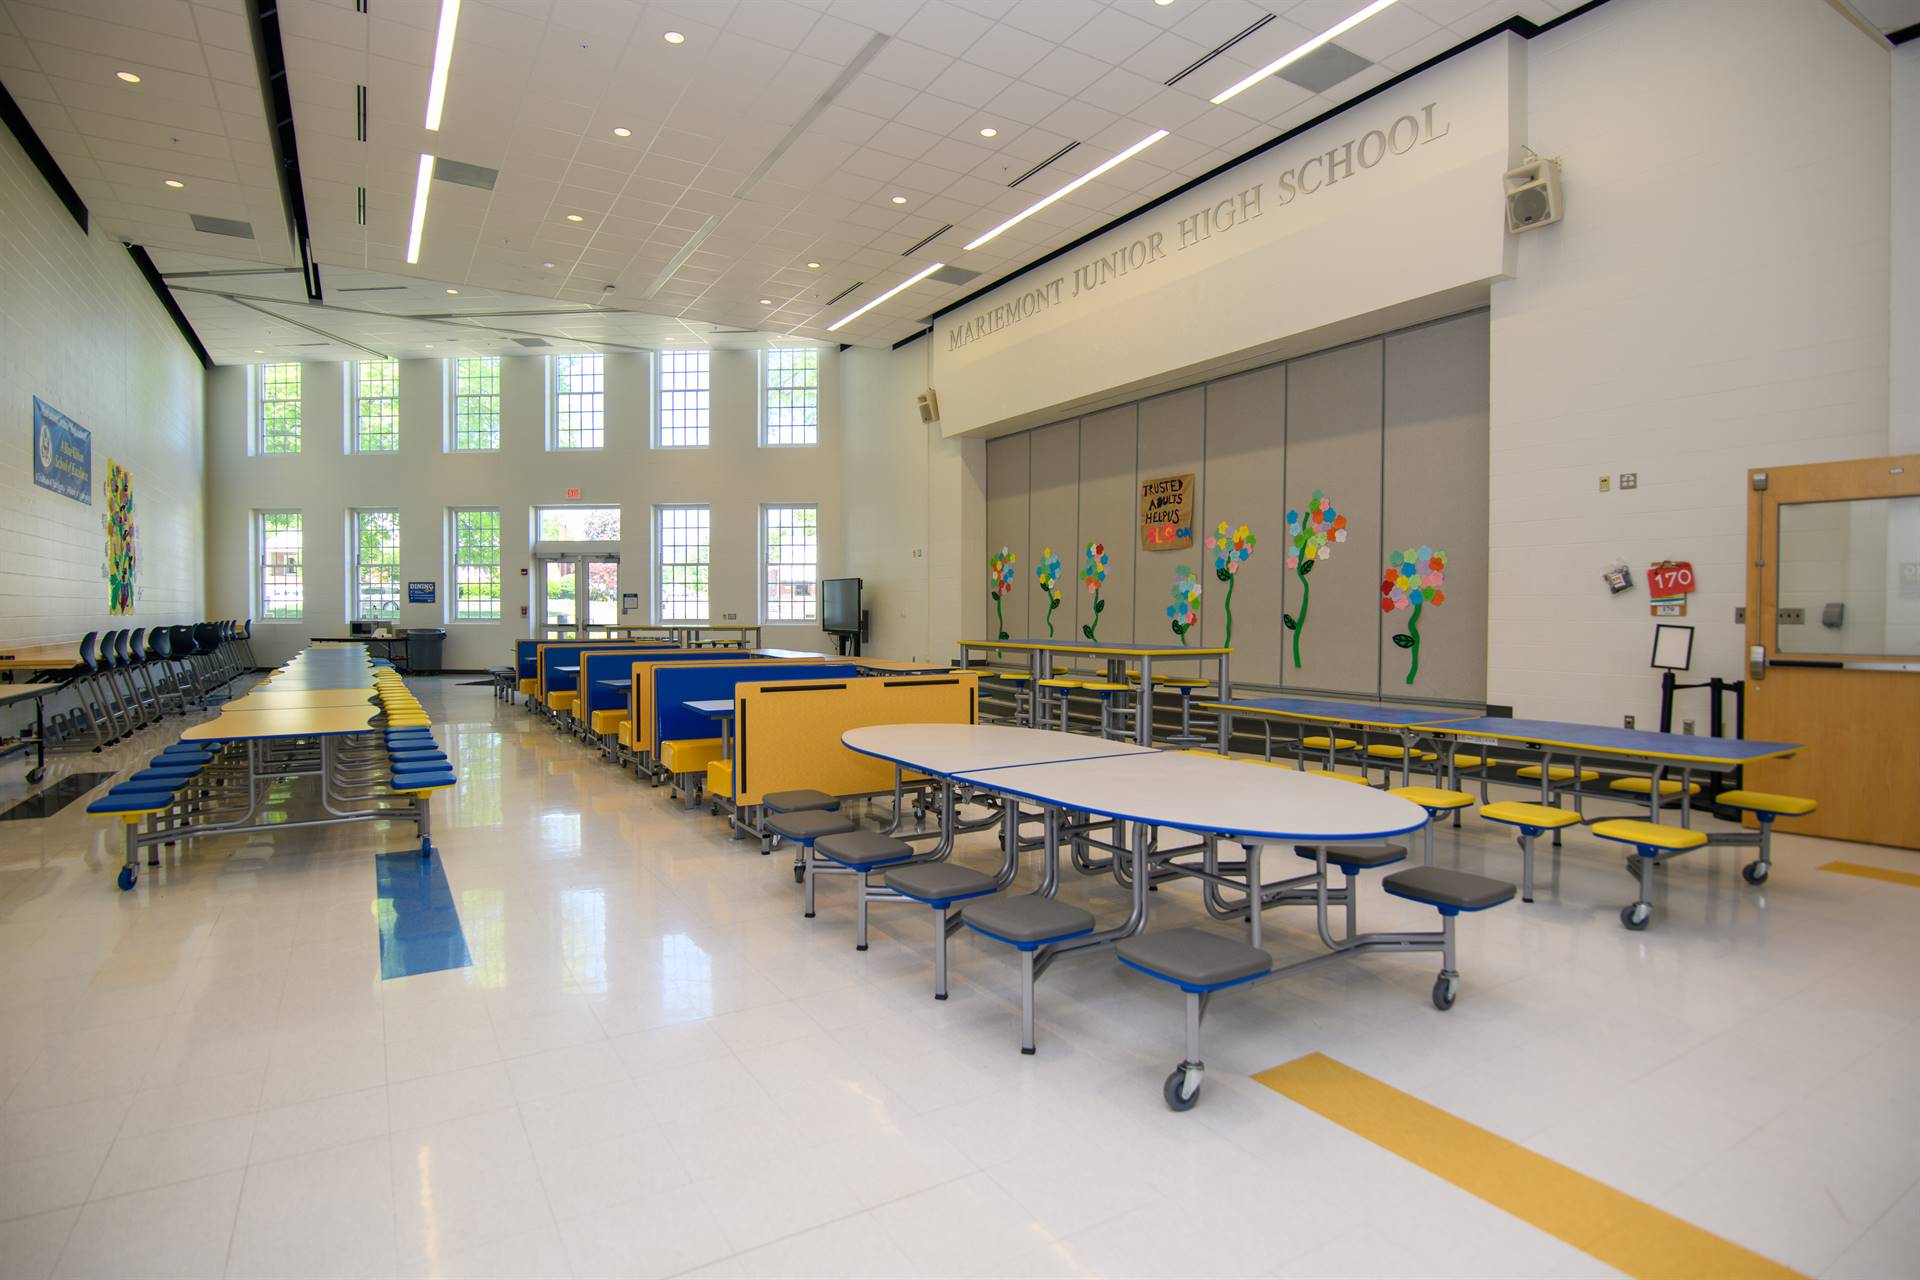 Mariemont Junior High School cafeteria/commons